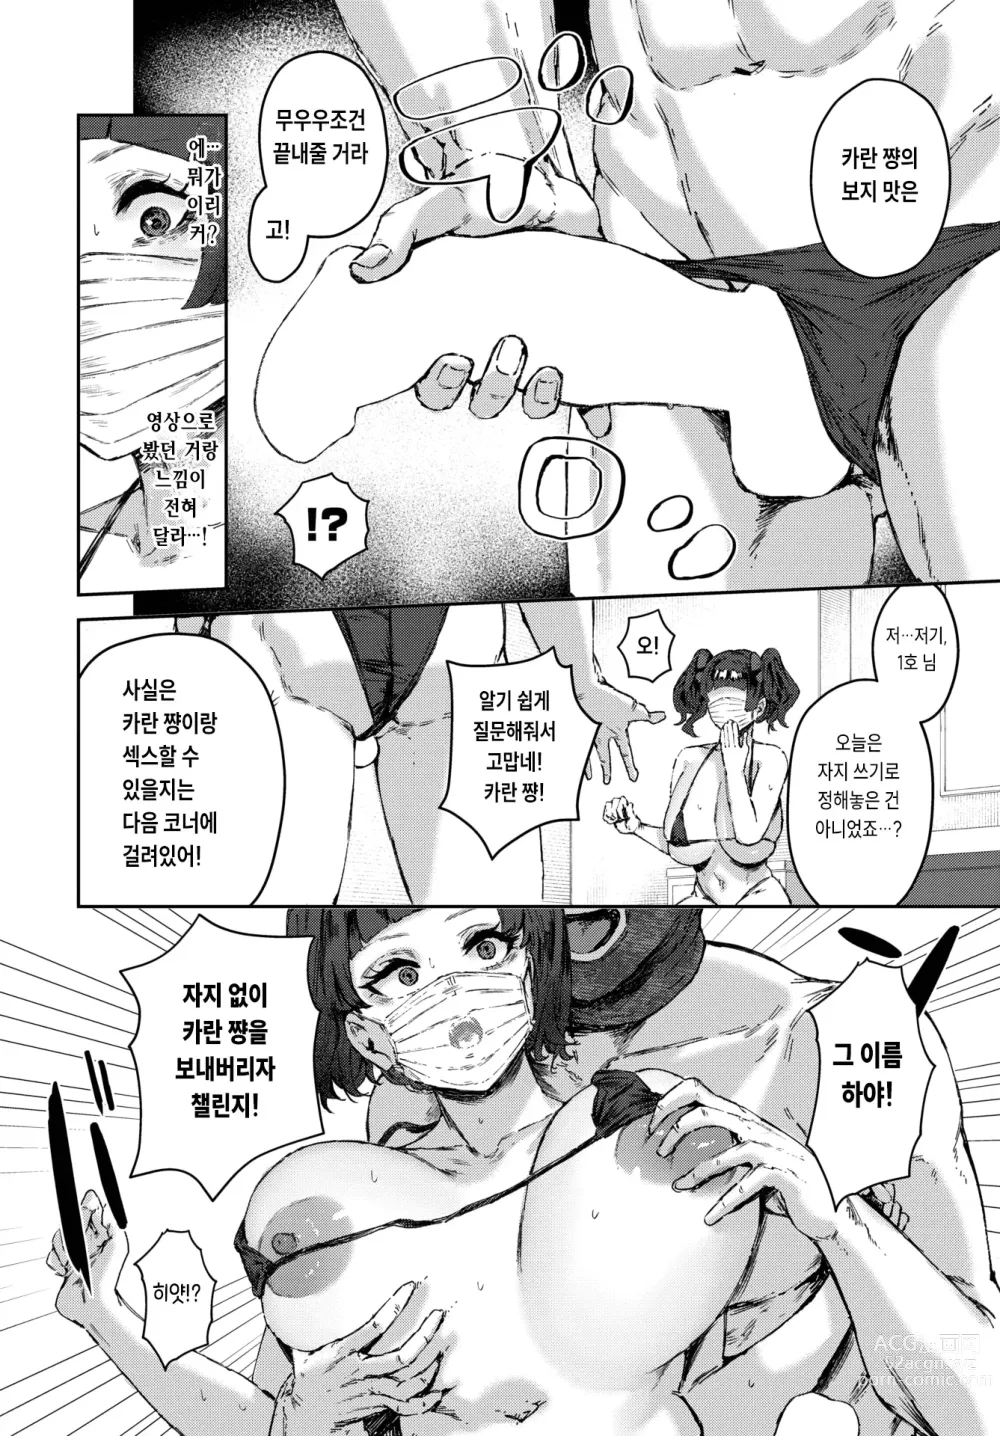 Page 6 of manga 「좋아」를 위해서면